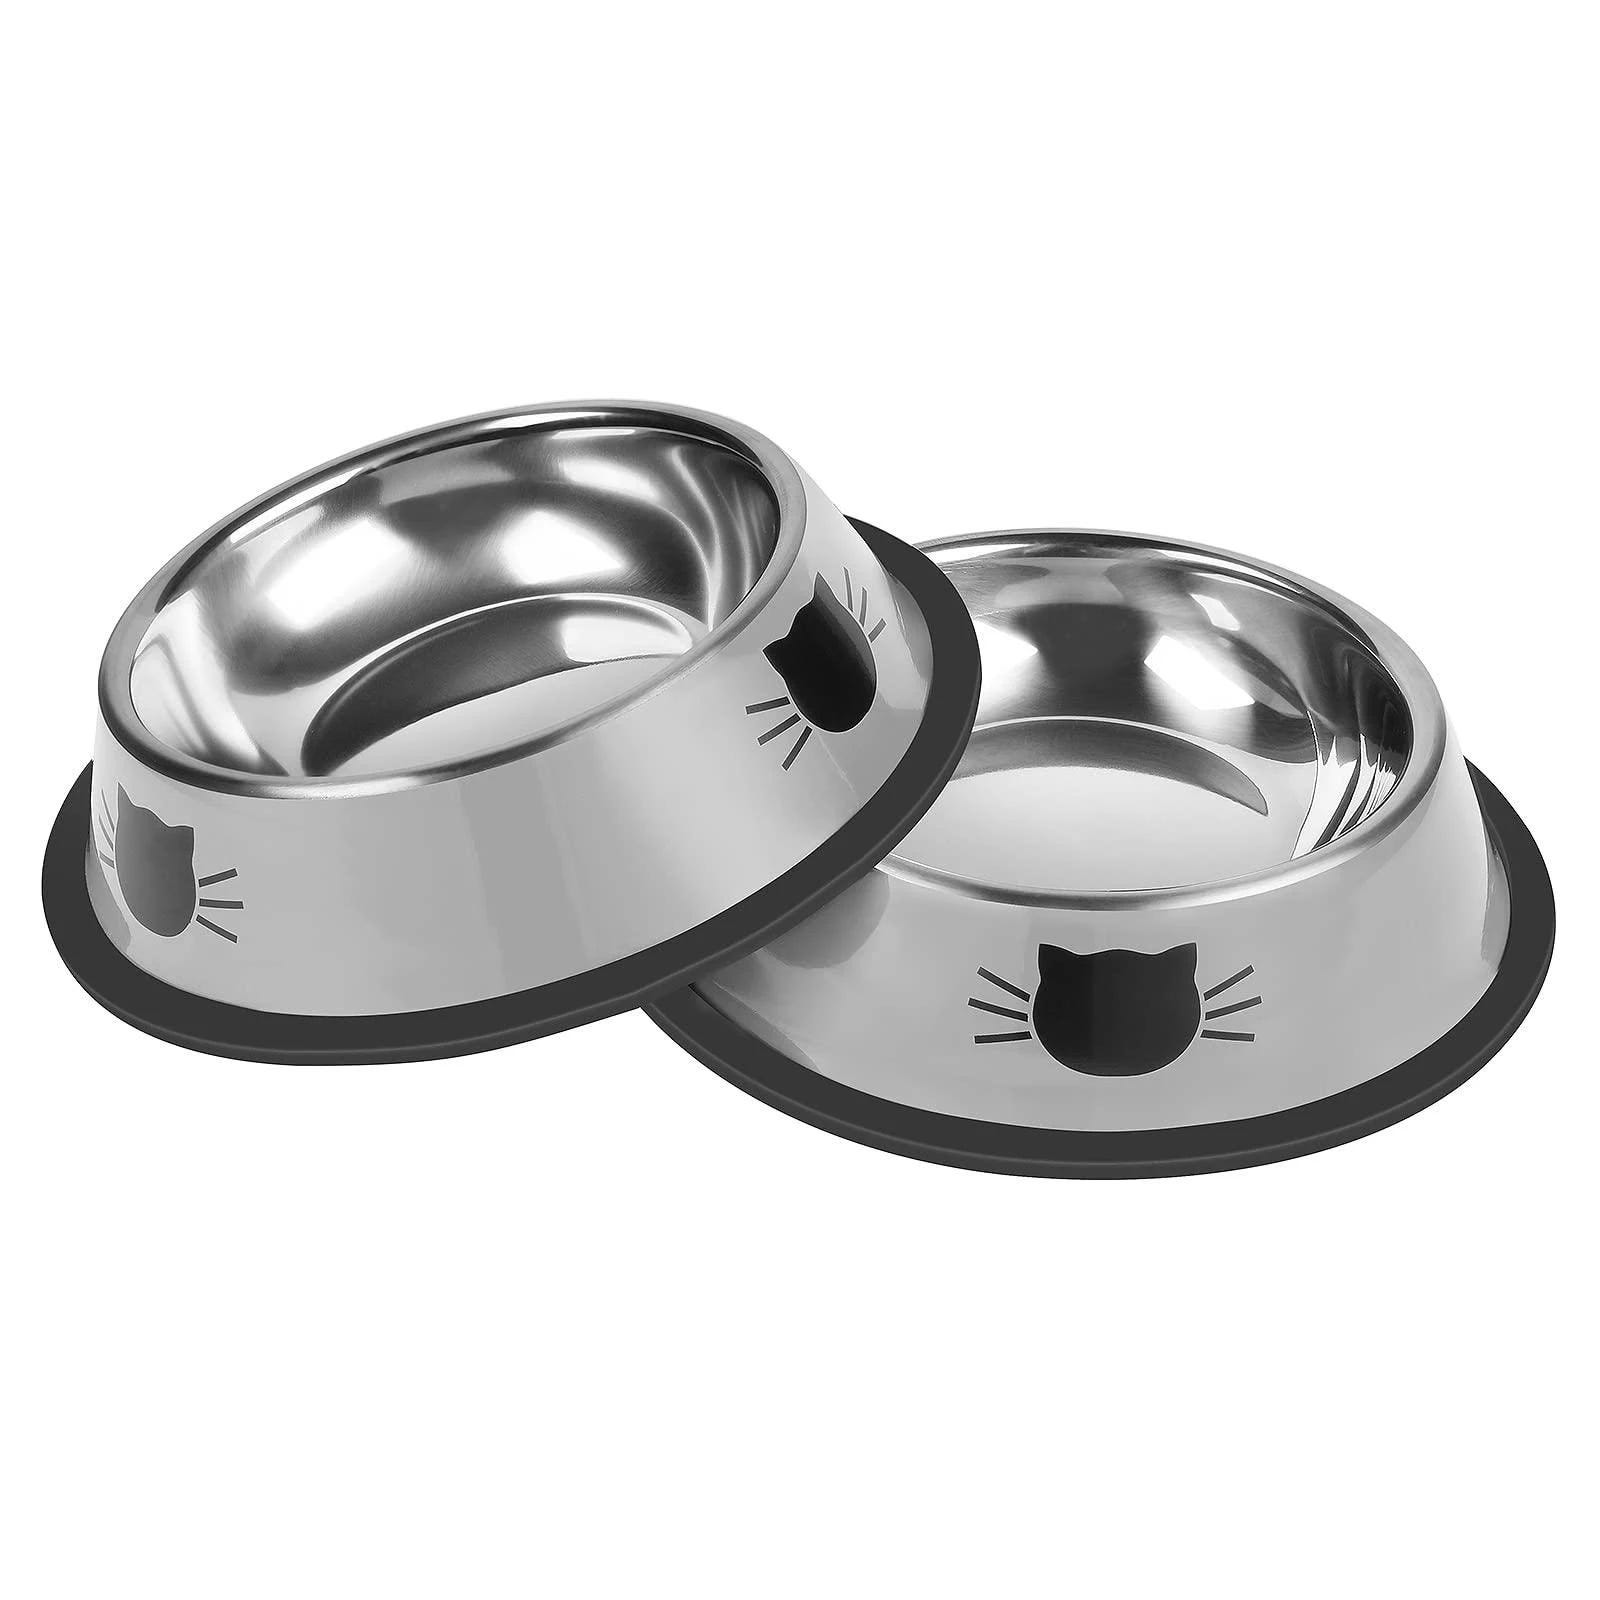 Serentive Unbreakable Non-Slip Cat Bowls - Small Pets Feeder Set | Image